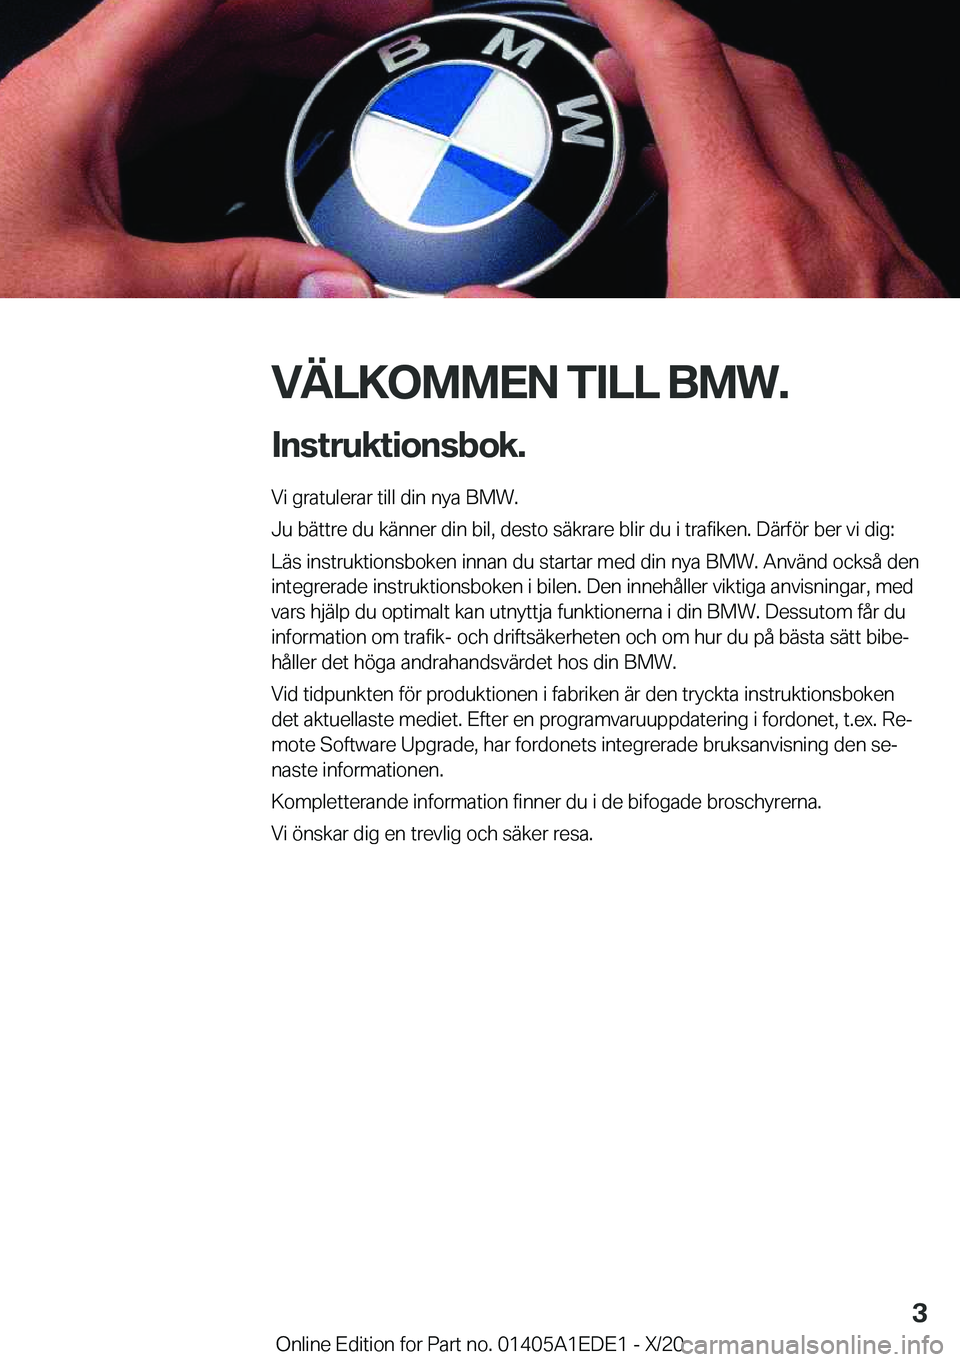 BMW 8 SERIES CONVERTIBLE 2021  InstruktionsbÖcker (in Swedish) �V�Ä�L�K�O�M�M�E�N��T�I�L�L��B�M�W�.�I�n�s�t�r�u�k�t�i�o�n�s�b�o�k�.
�V�i��g�r�a�t�u�l�e�r�a�r��t�i�l�l��d�i�n��n�y�a��B�M�W�.
�J�u��b�ä�t�t�r�e��d�u��k�ä�n�n�e�r��d�i�n��b�i�l�,��d�e�